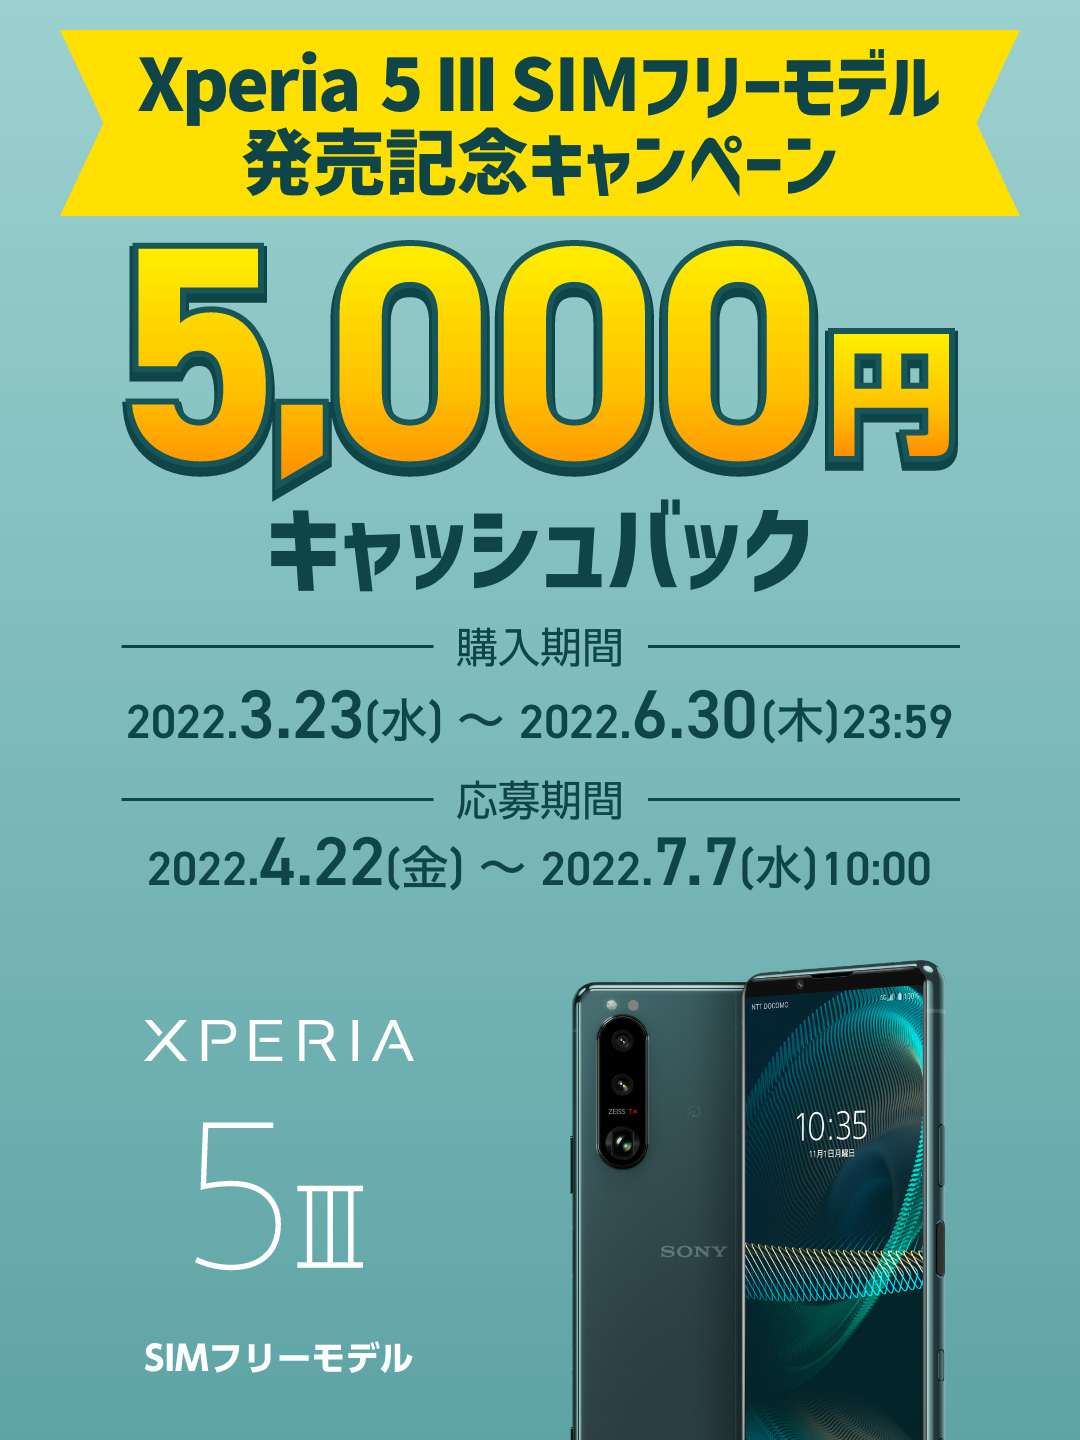 Xperia 5 III SIMフリーモデル発売記念キャンペーン | Xperia ...